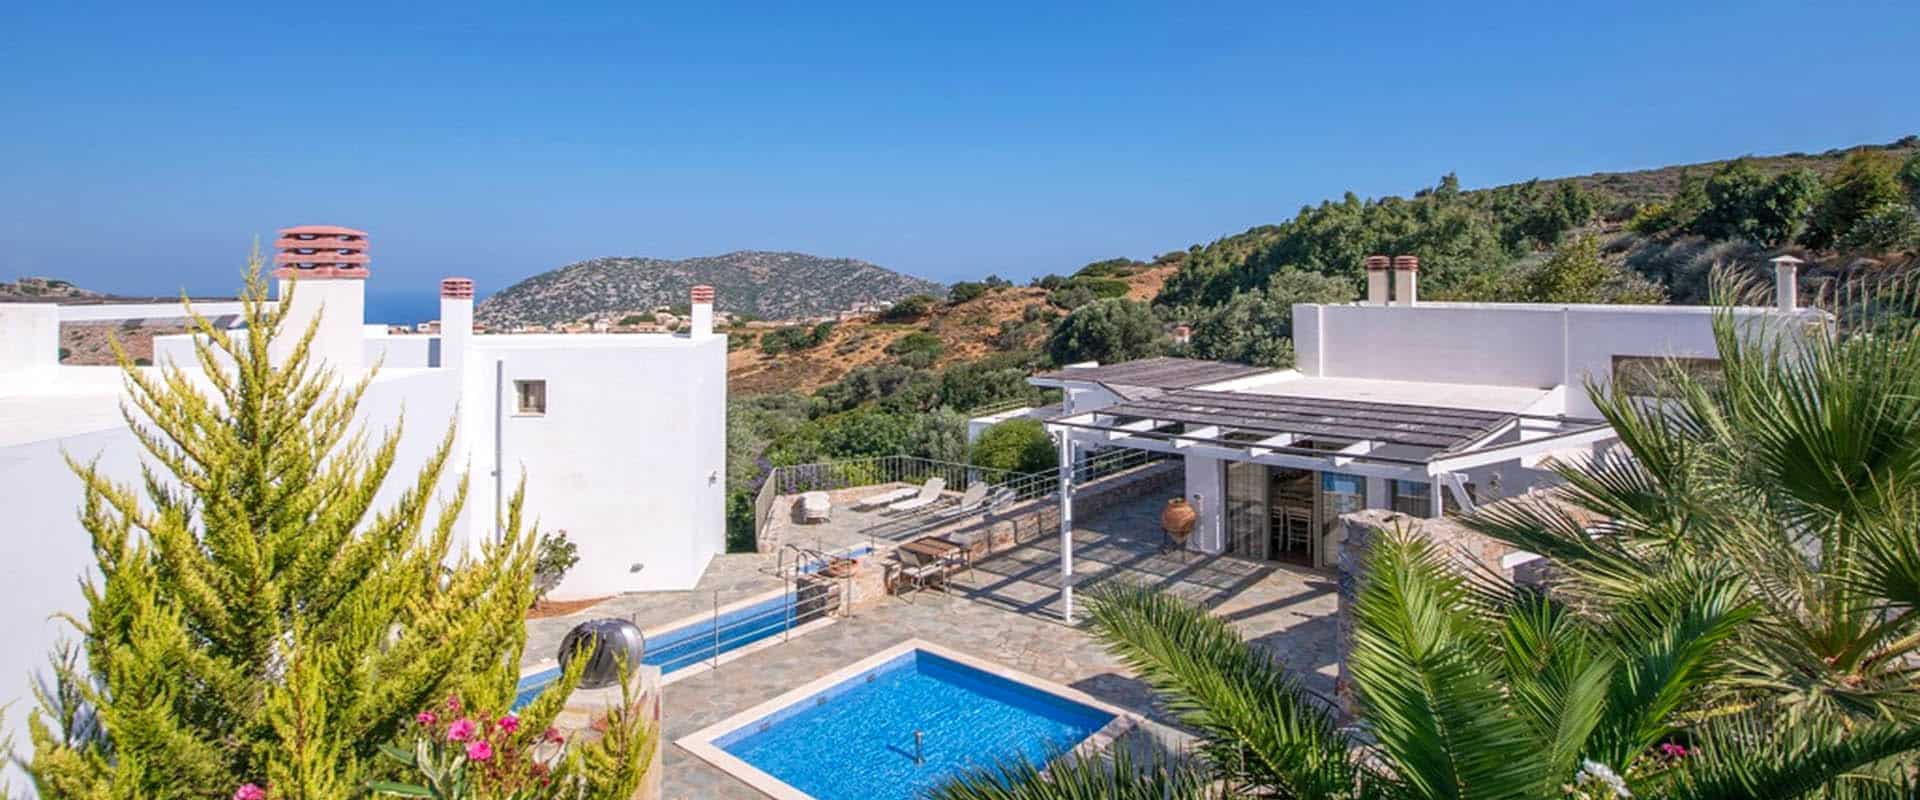 ecotourism holiday hotel sustainable tourism Crete Greece